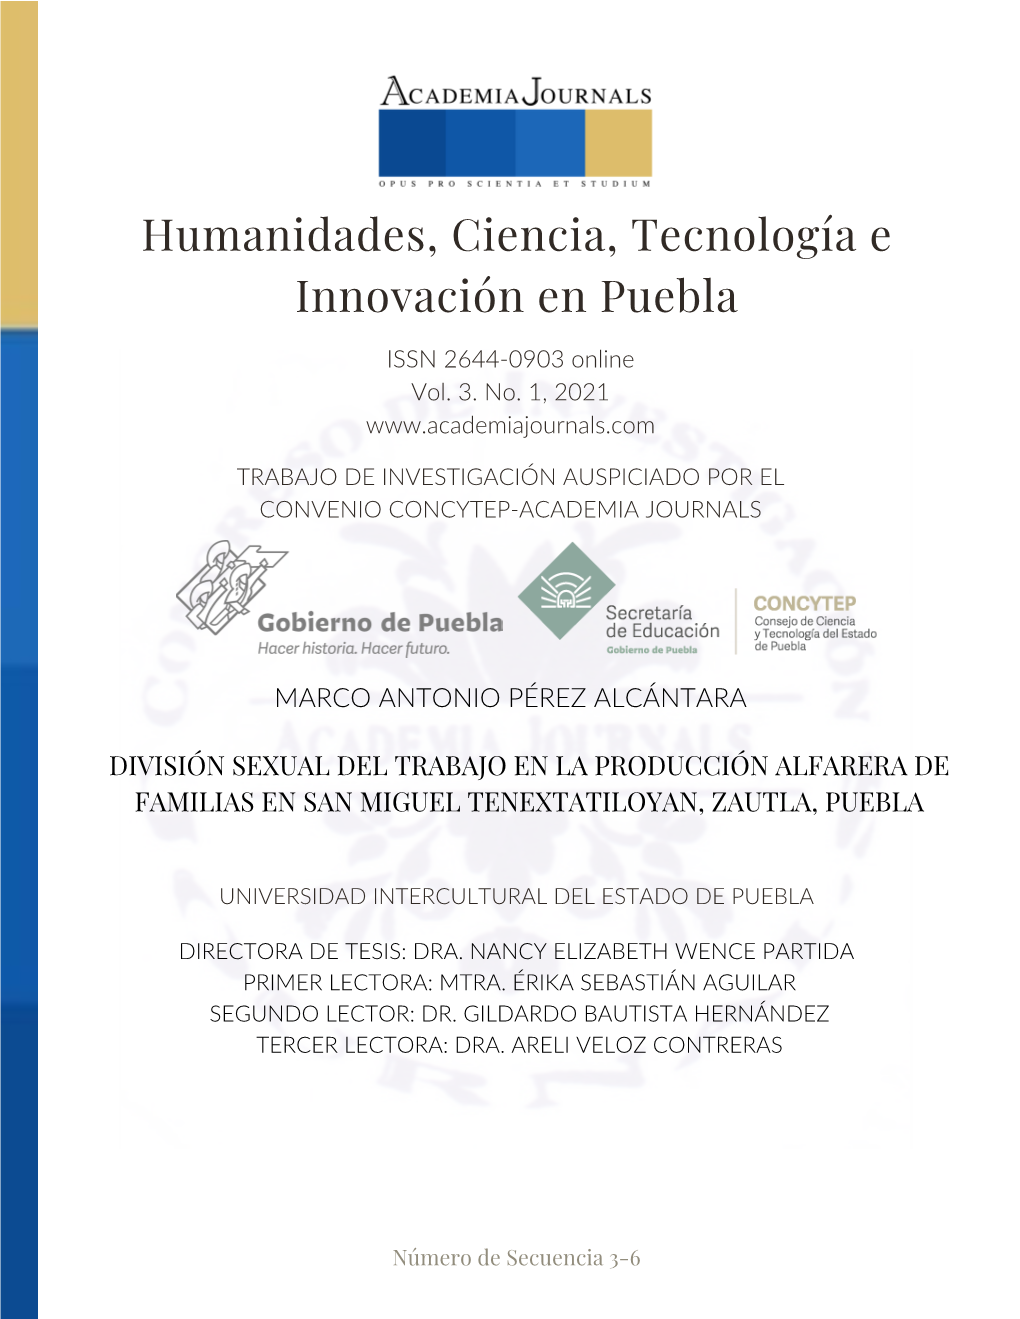 Humanidades, Ciencia, Tecnología E Innovación En Puebla